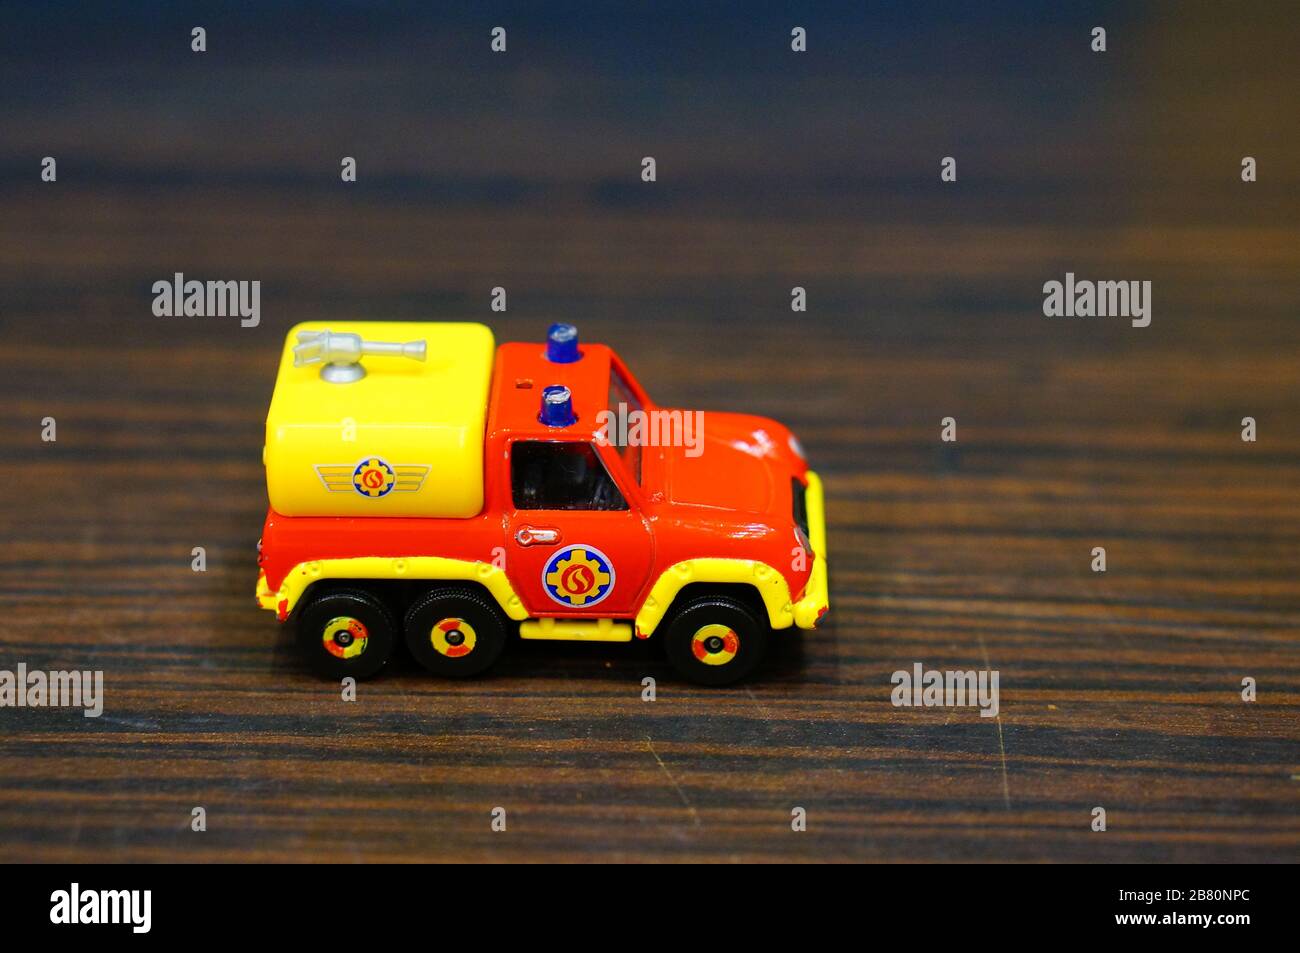 POZNAN, POLAND - Mar 13, 2020: Small Fireman Sam Venus toy model vehicle on  a wooden surface Stock Photo - Alamy